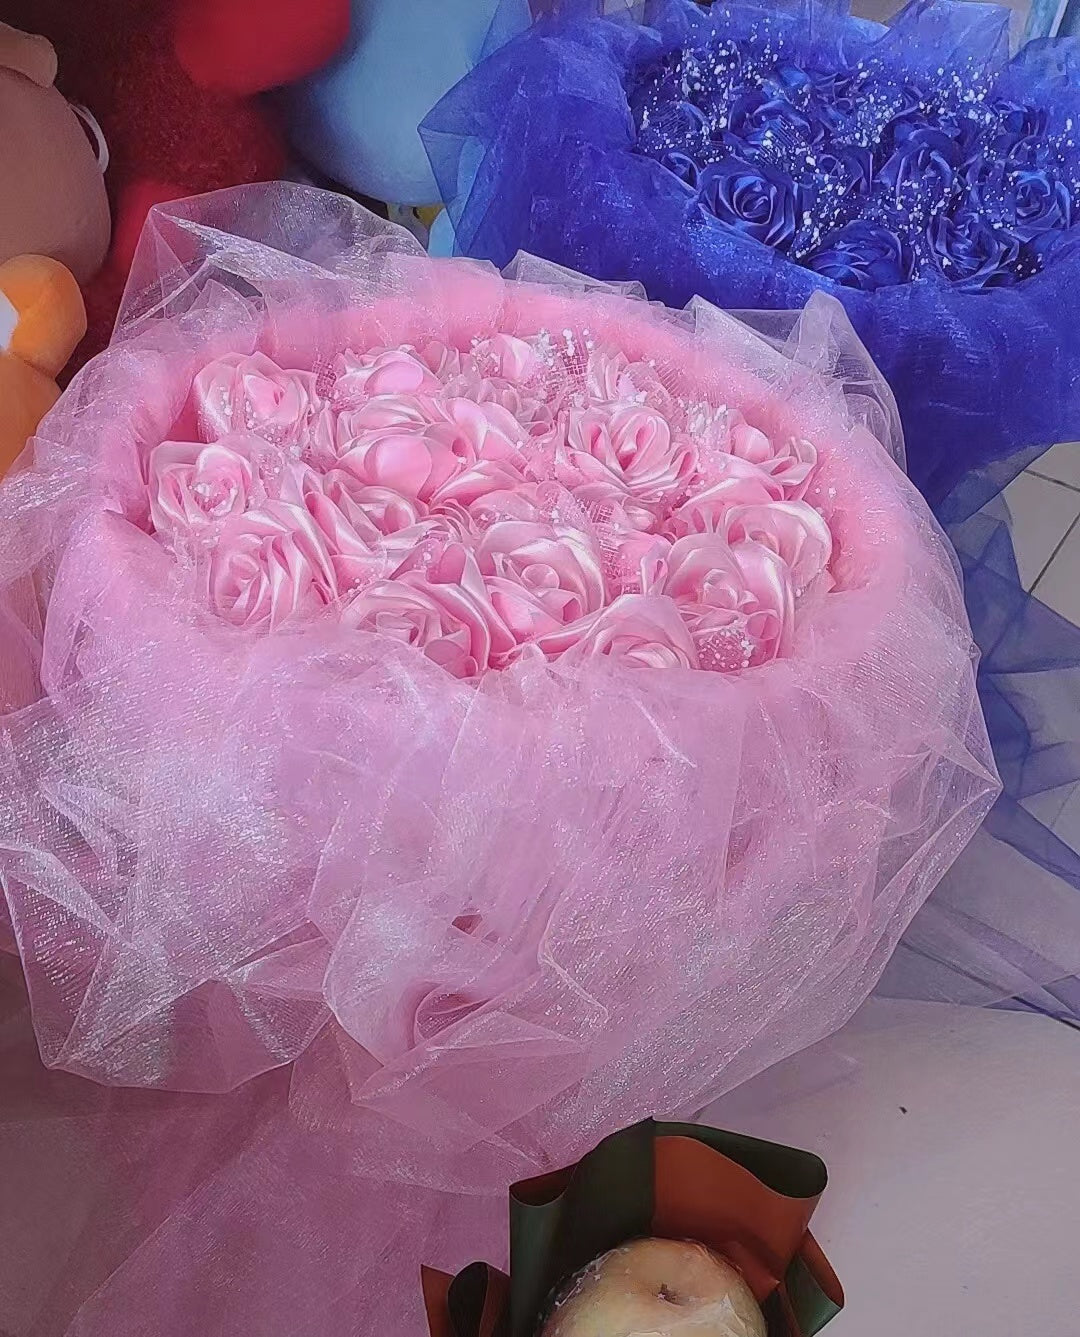 Handmade diy custom ribbon rose flower 33pcs finish products for birthday girlfriend gift